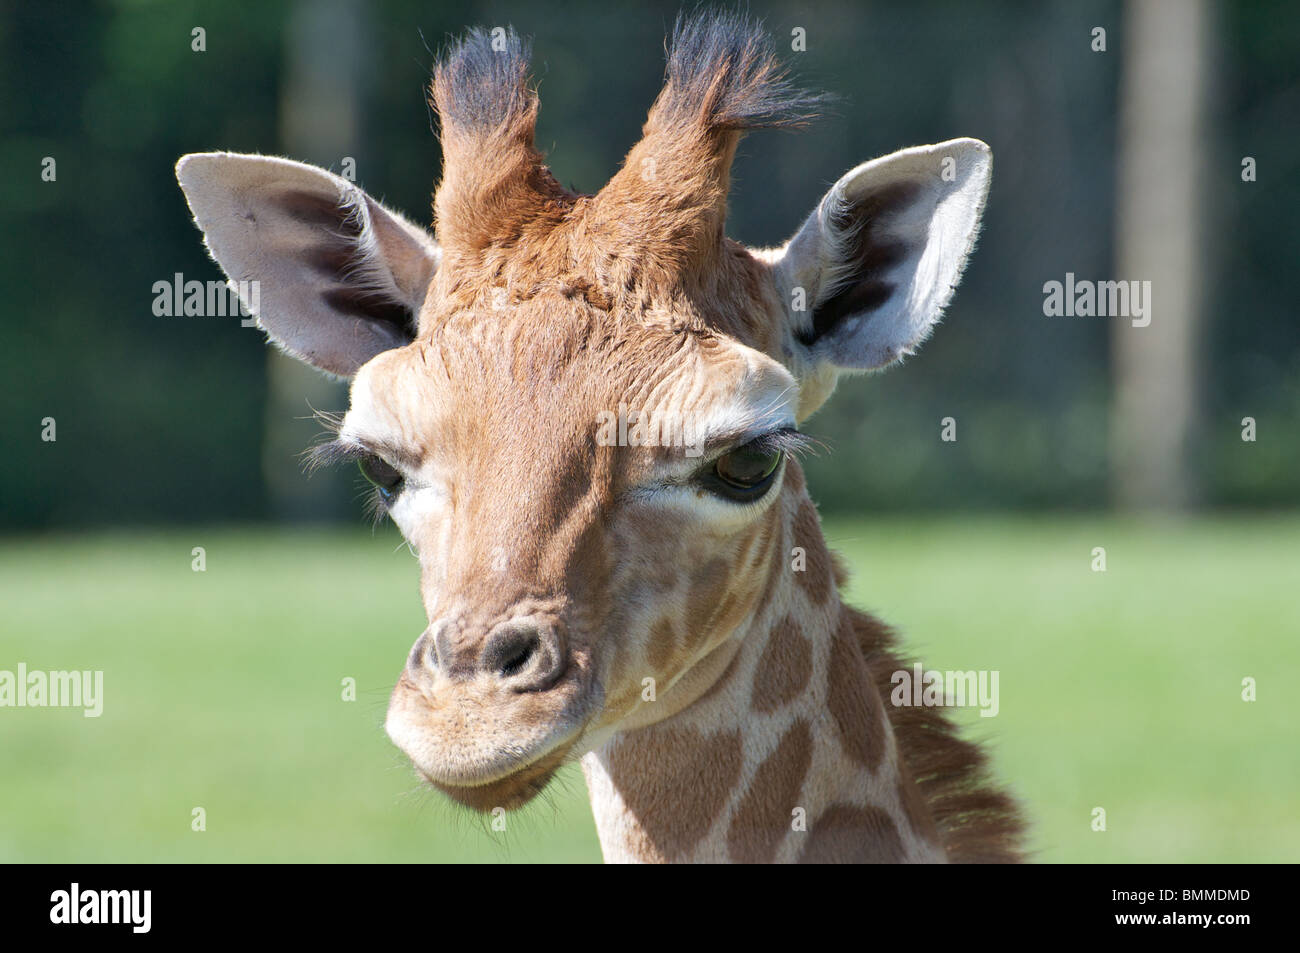 Young giraffe looking into camera Stock Photo